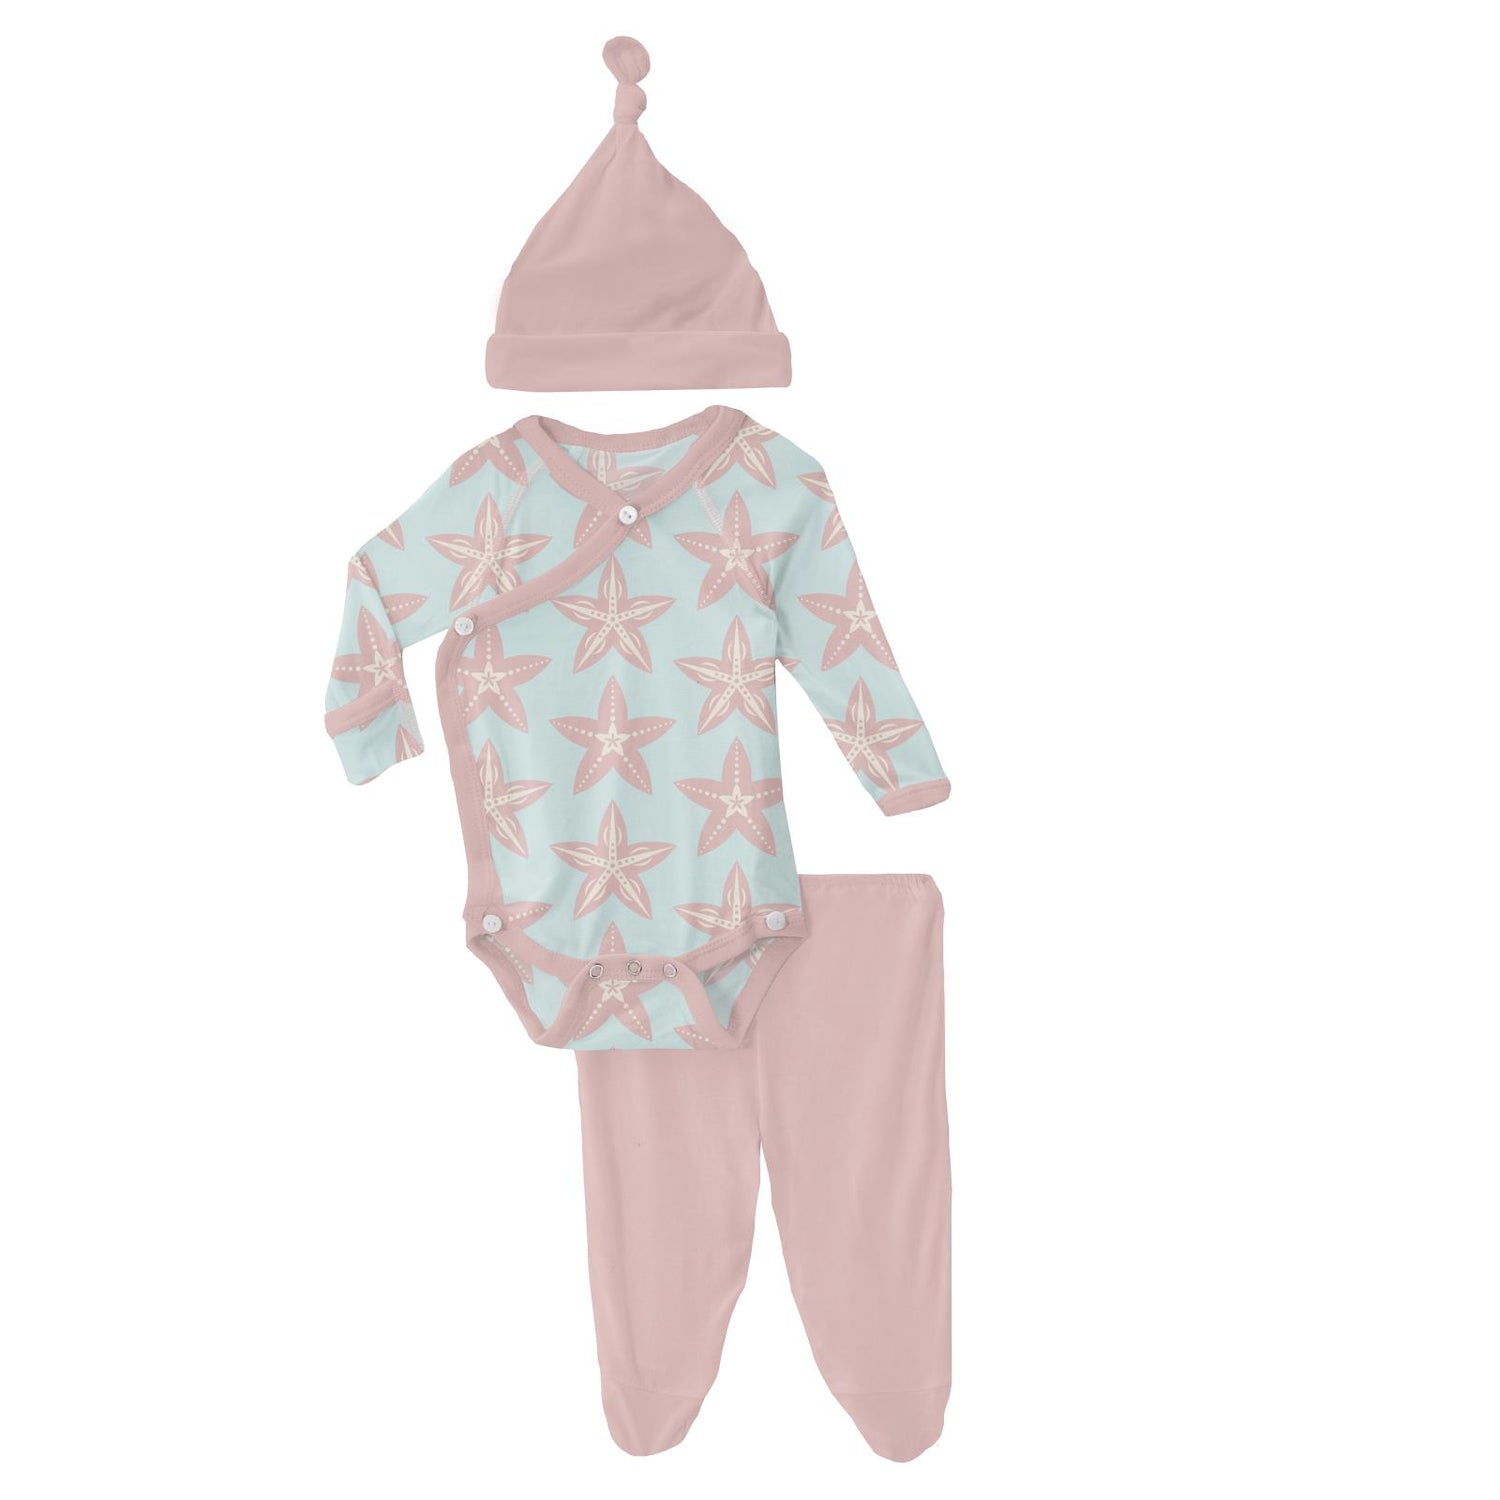 Kimono Newborn Gift Set with Elephant Box in Fresh Air Fancy Starfish